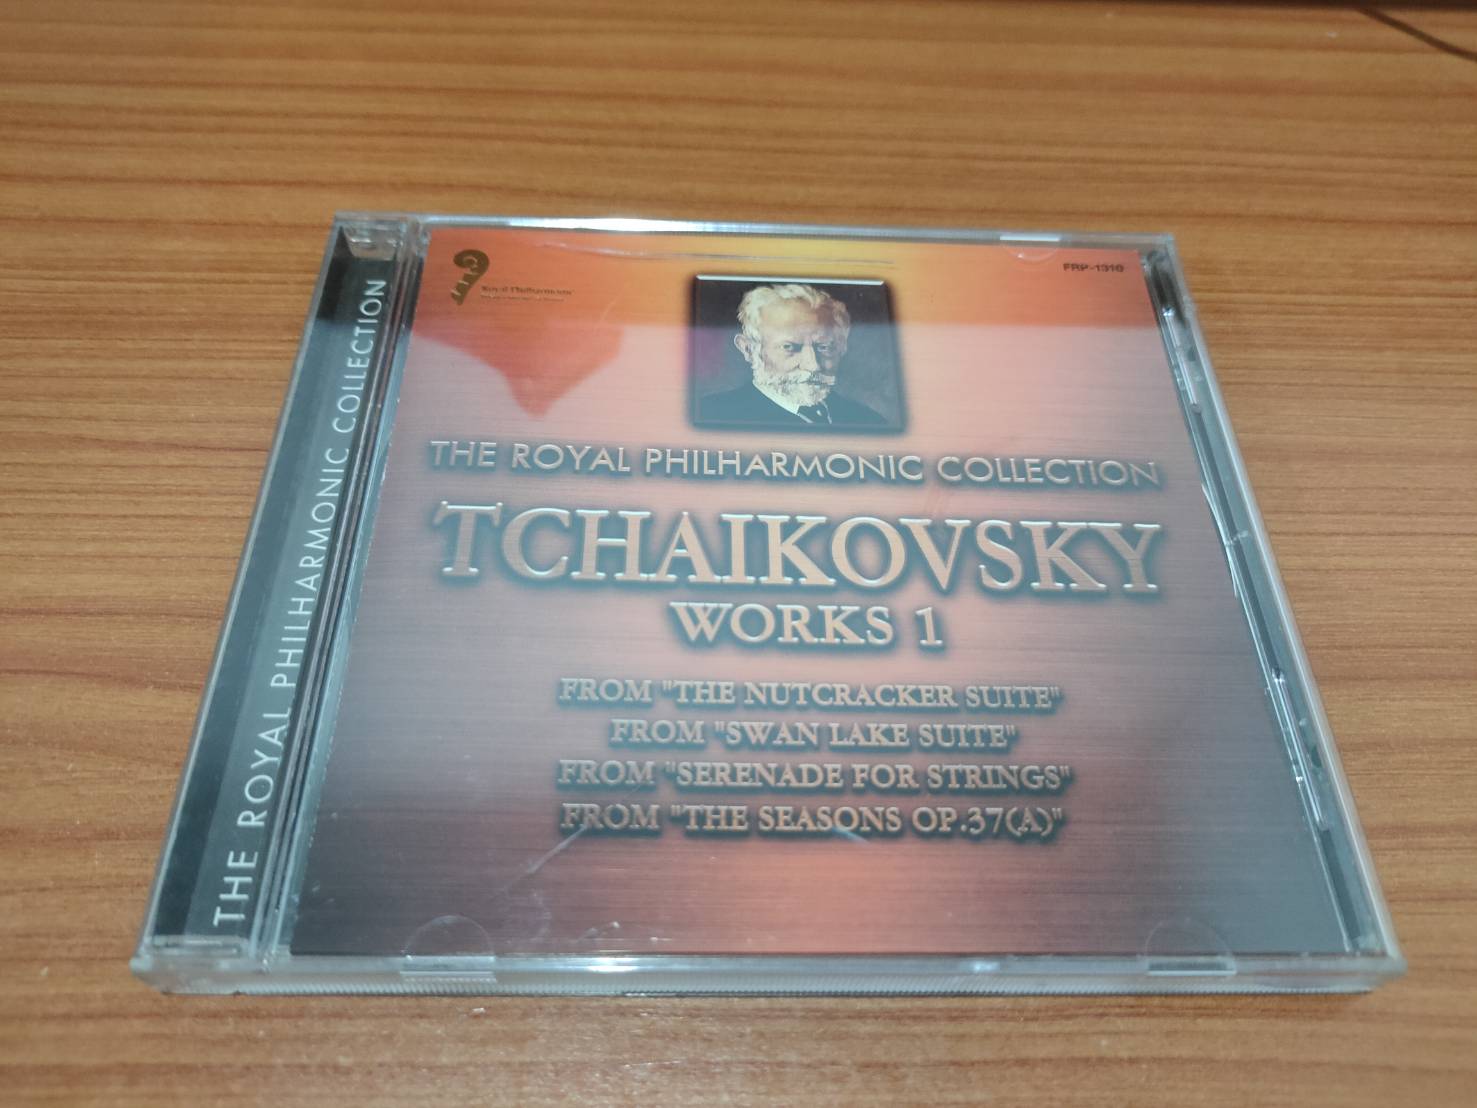 CD.MUSIC ซีดีเพลง เพลงสากล THE ROYAL PHILHARMONIC COLLECTION TCHAIKOVSKY WORKS 1